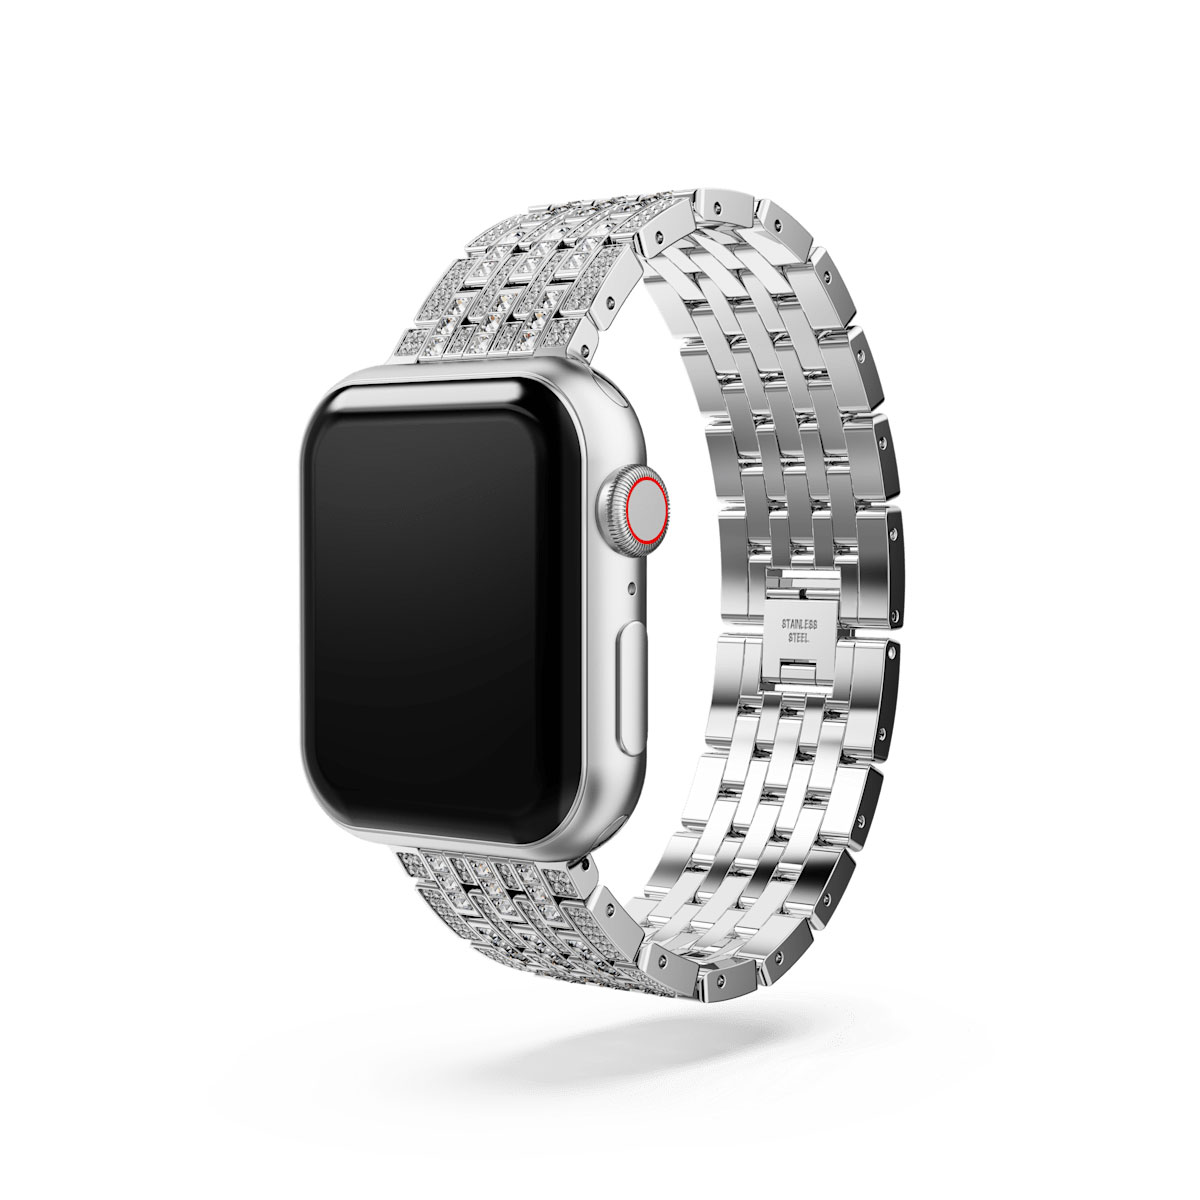 Swarovski Sparkling Princess Apple Watch V3 Silver Stainless Steel Strap